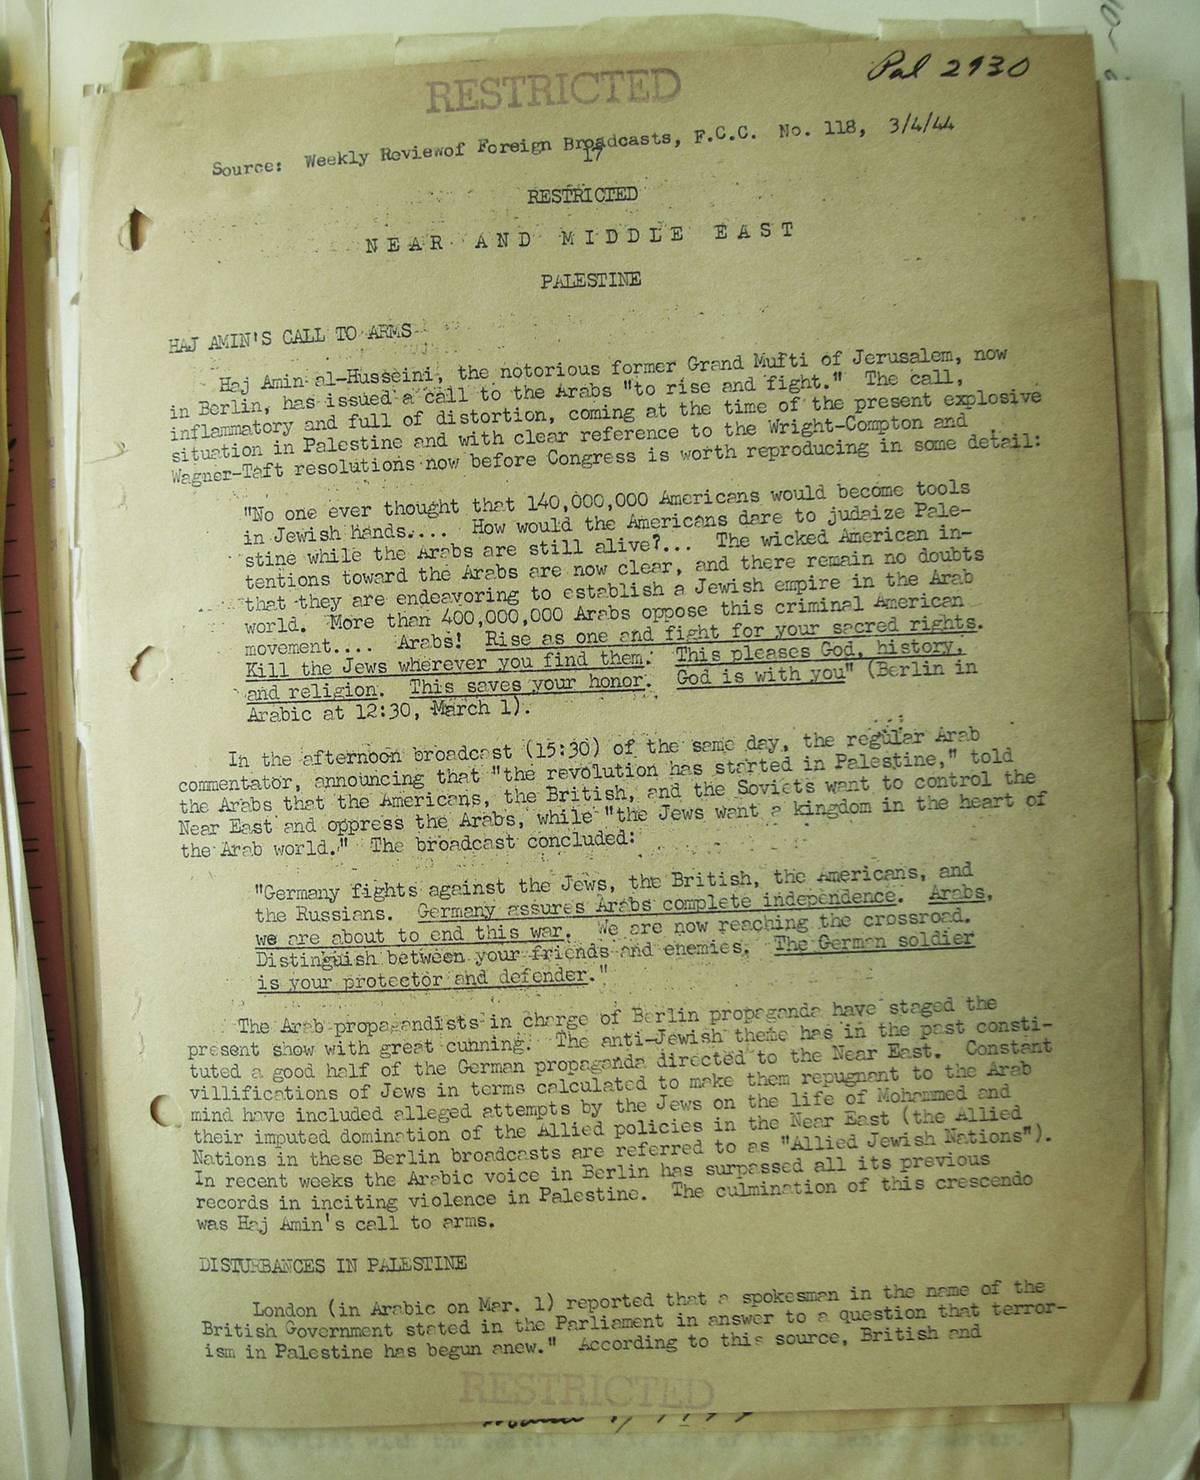 Transcript of a broadcast made by Amin al-Husseini on March 1, 1944